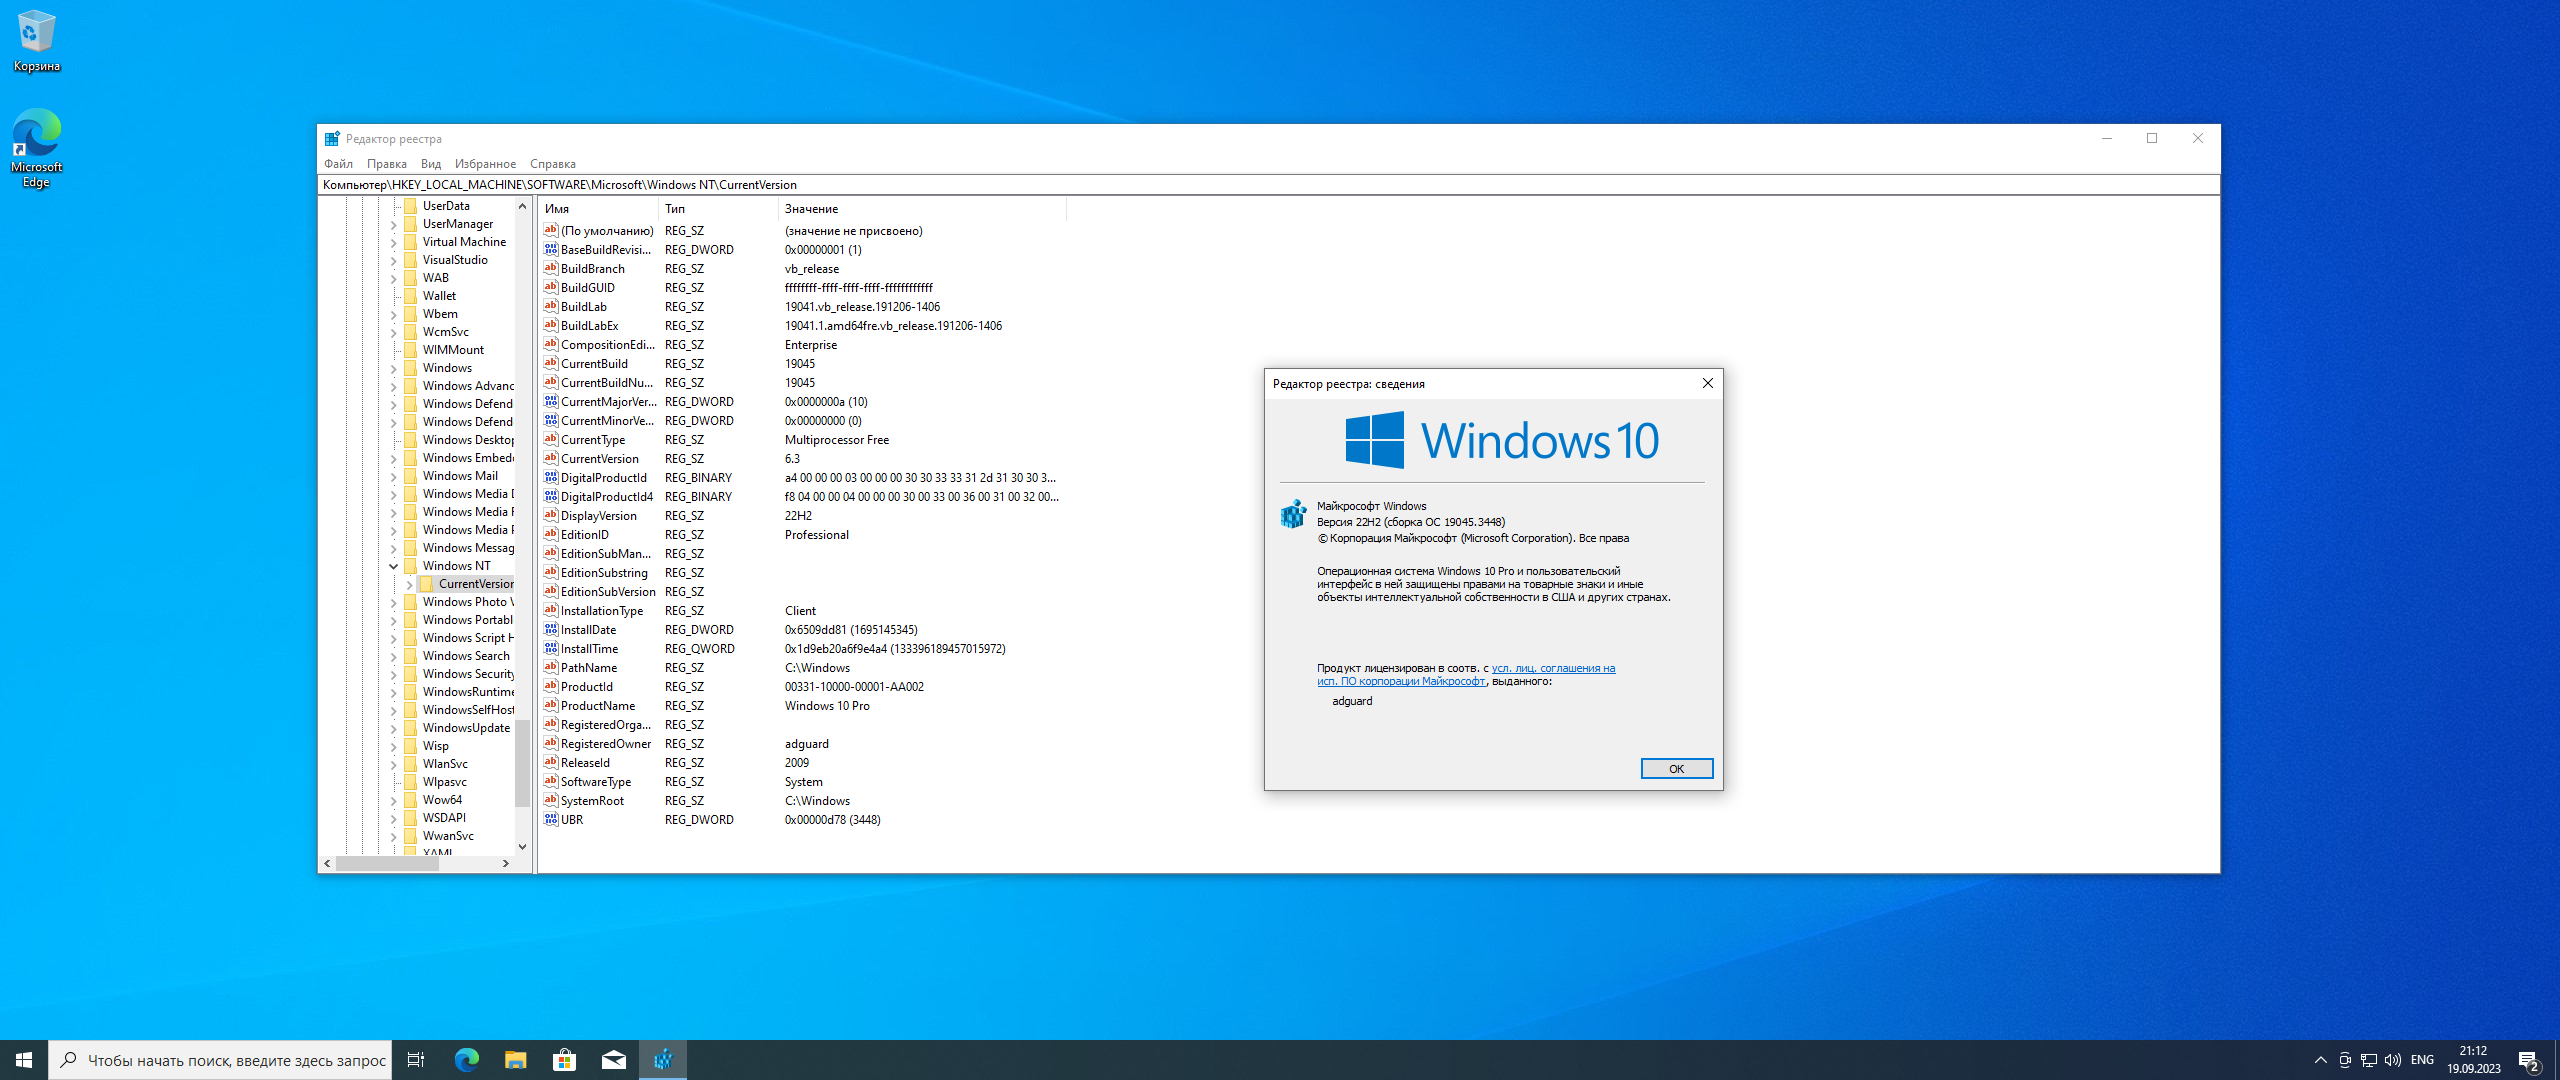 Windows 10 pro 22h2 sanlex. Windows 10 22h2. Виндовс 10 версия 21h1. Windows 10 x64 22h2 MSDN 2023 чистый оригинальный ISO С md5 контролем. Windows 10 Version 22h2 для x64.